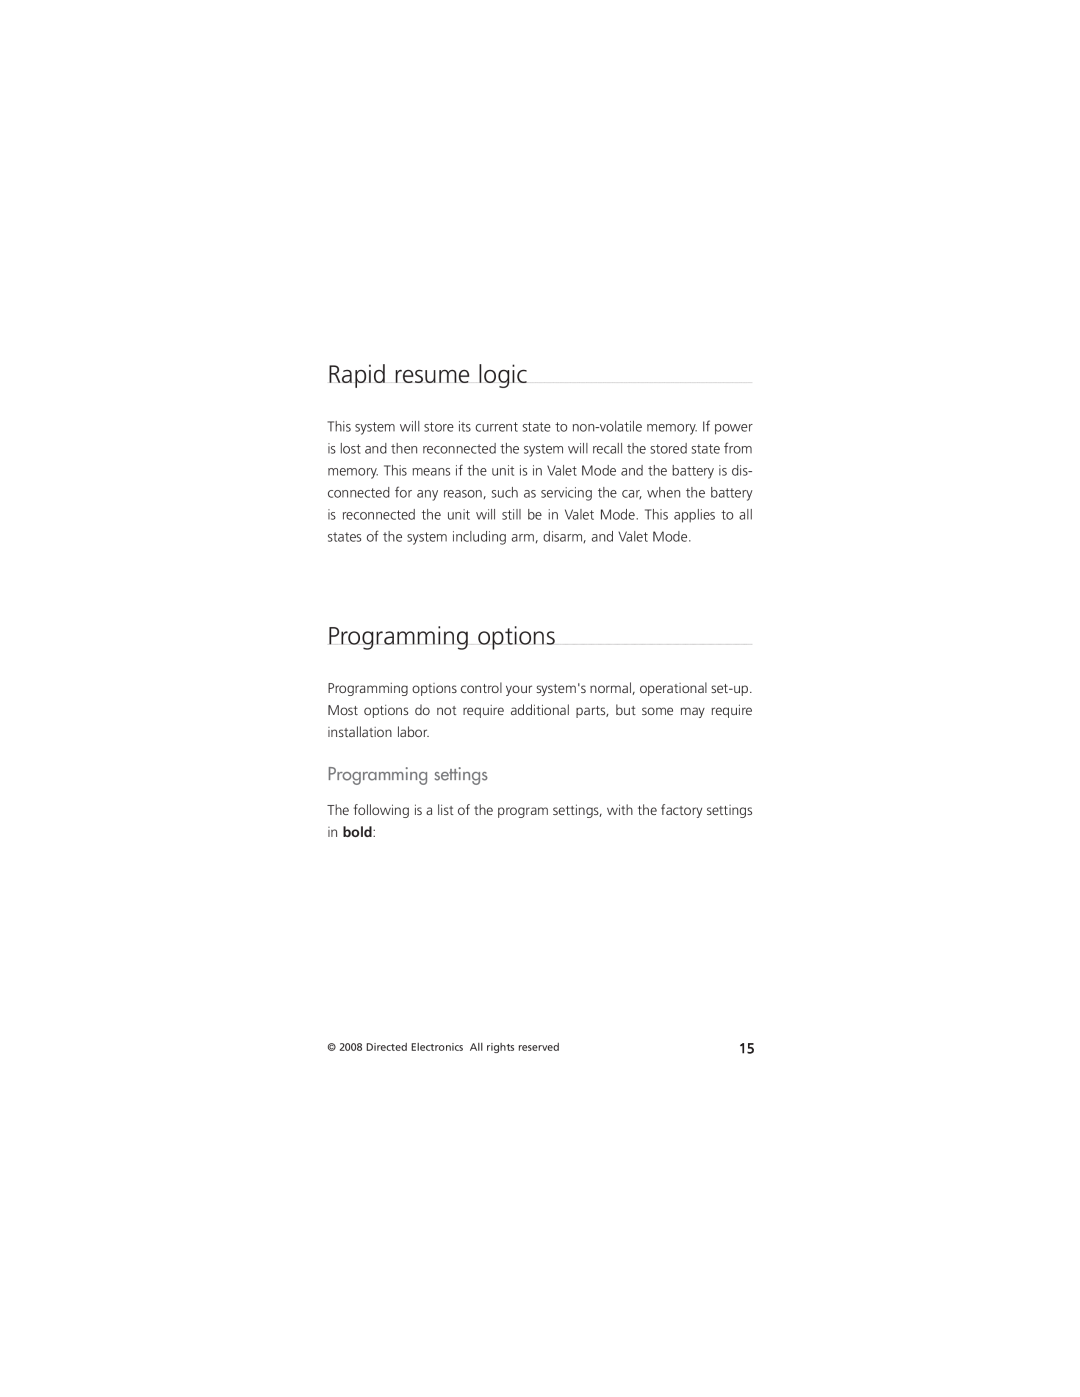 Directed Electronics AM5 manual Rapid resume logic, Programming options, Programming settings 